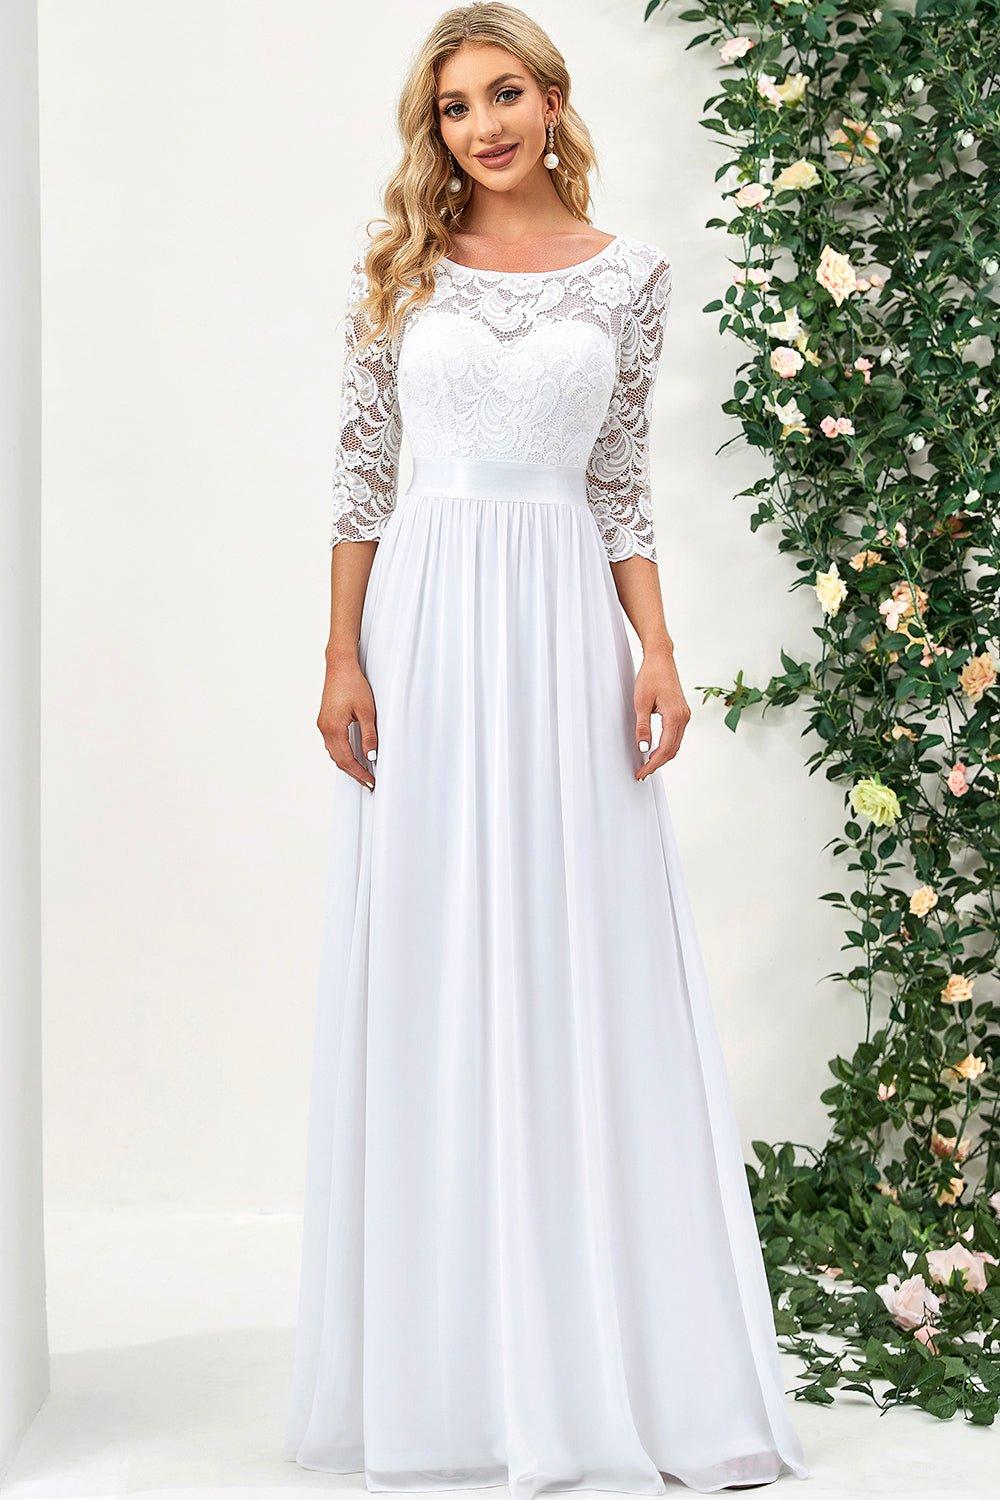 Ever-Pretty Elegant Lace A-Line Flower Girl Dress